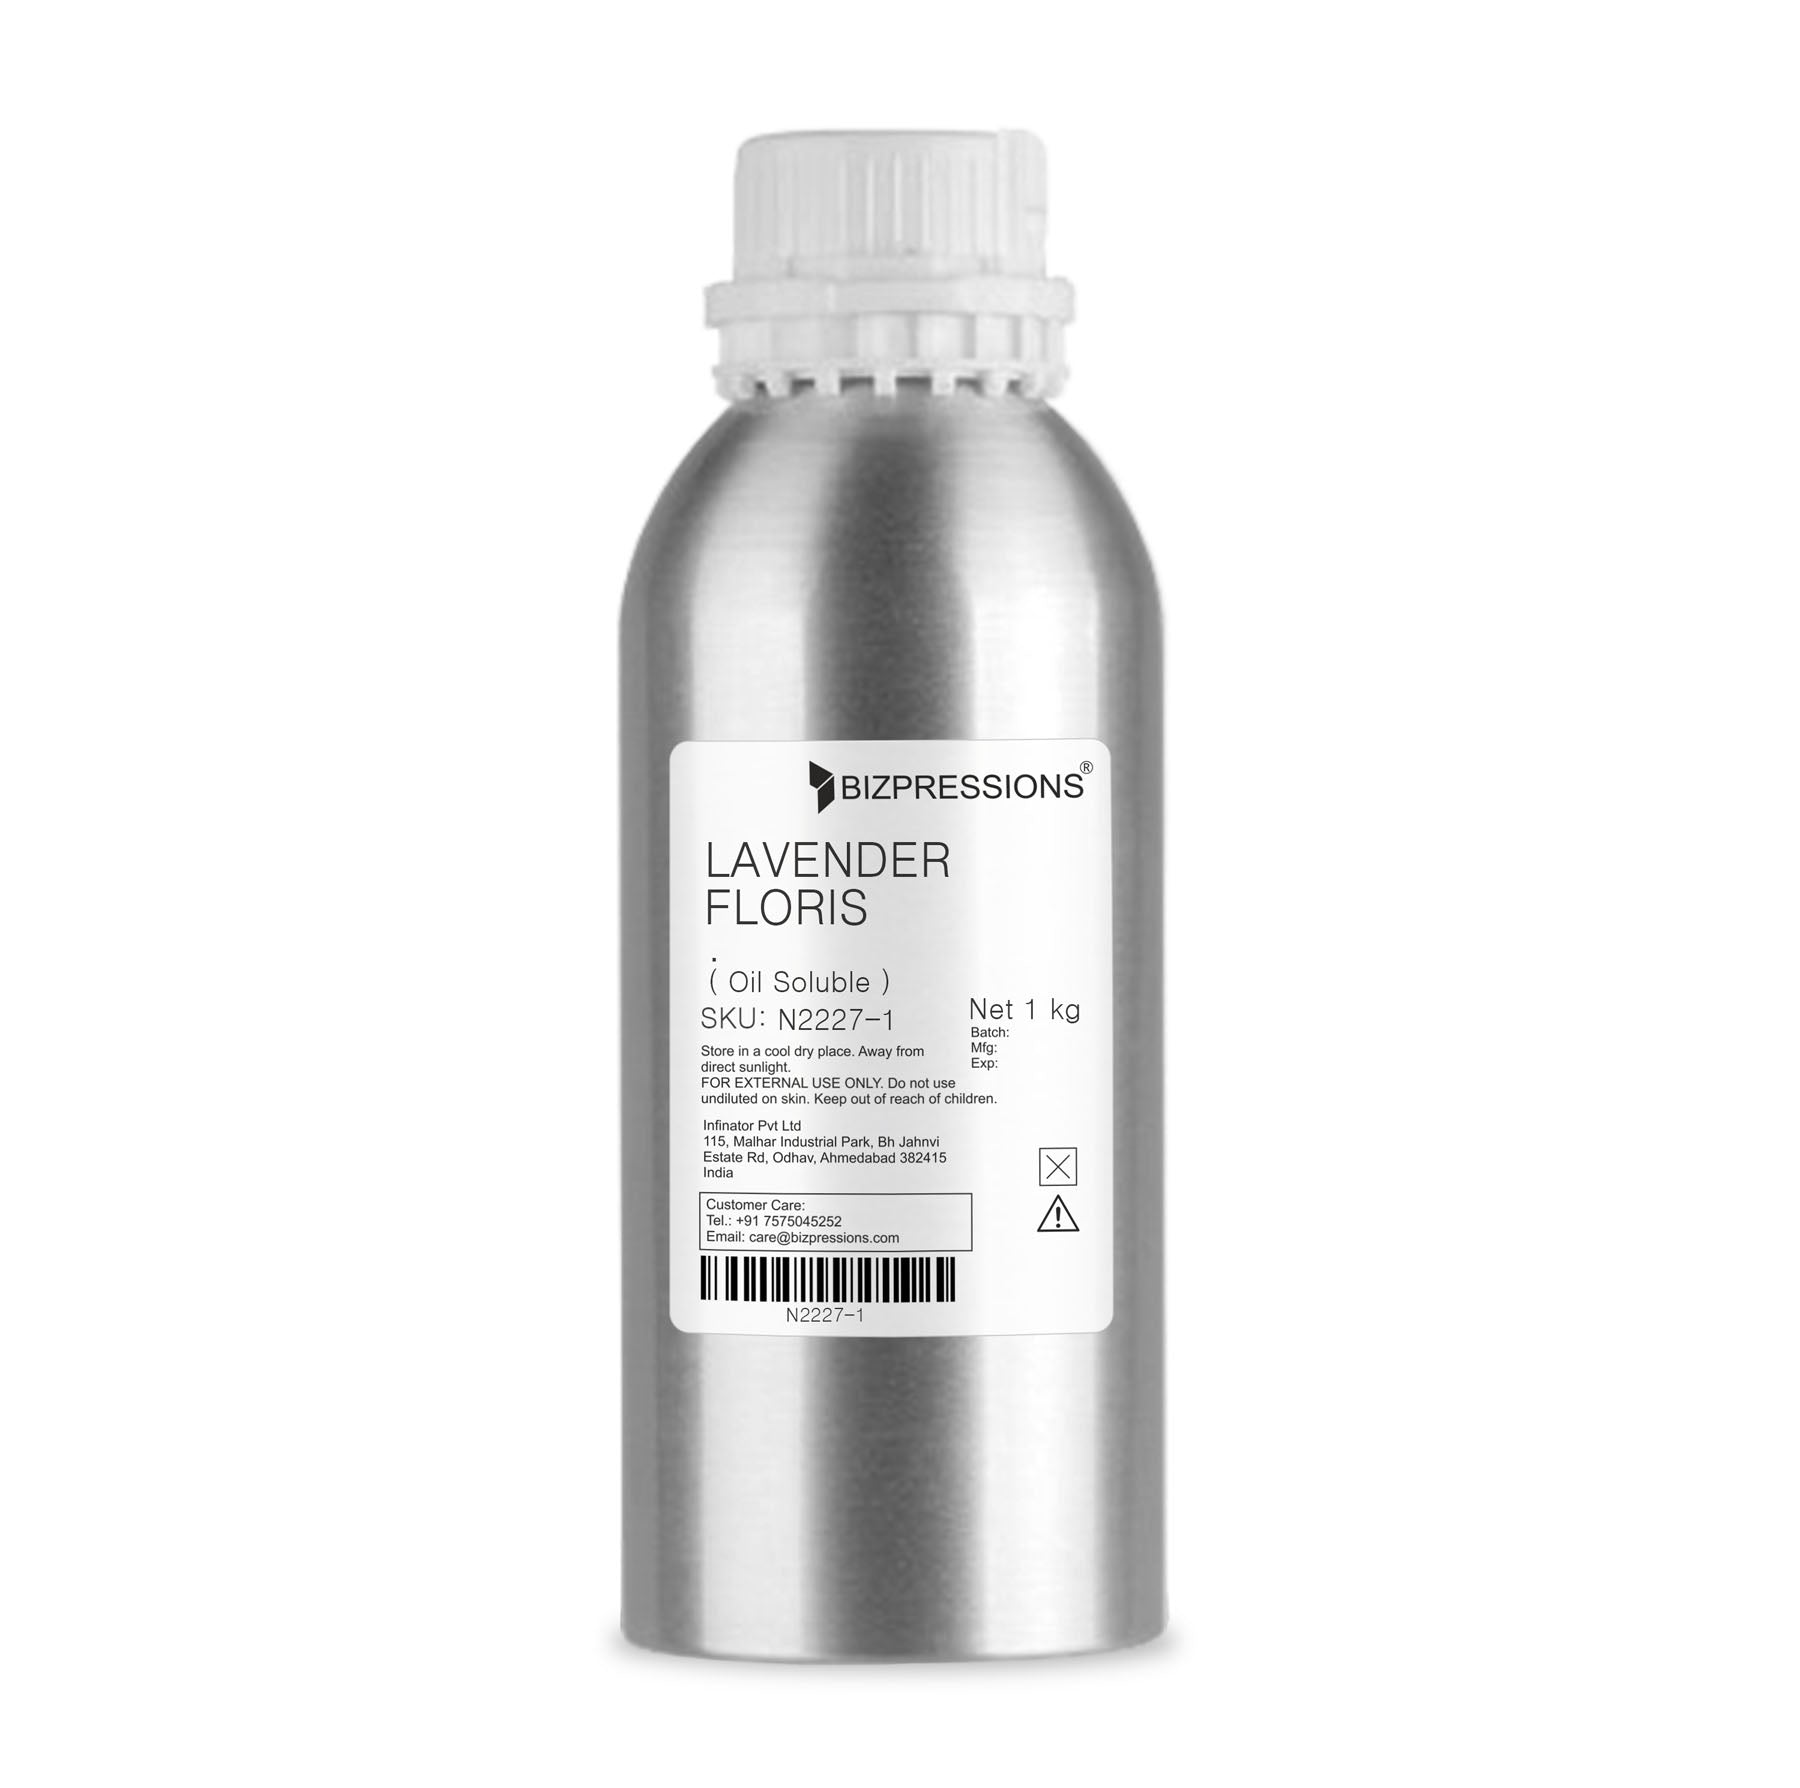 LAVENDER FLORIS - Fragrance ( Oil Soluble ) - 1 kg